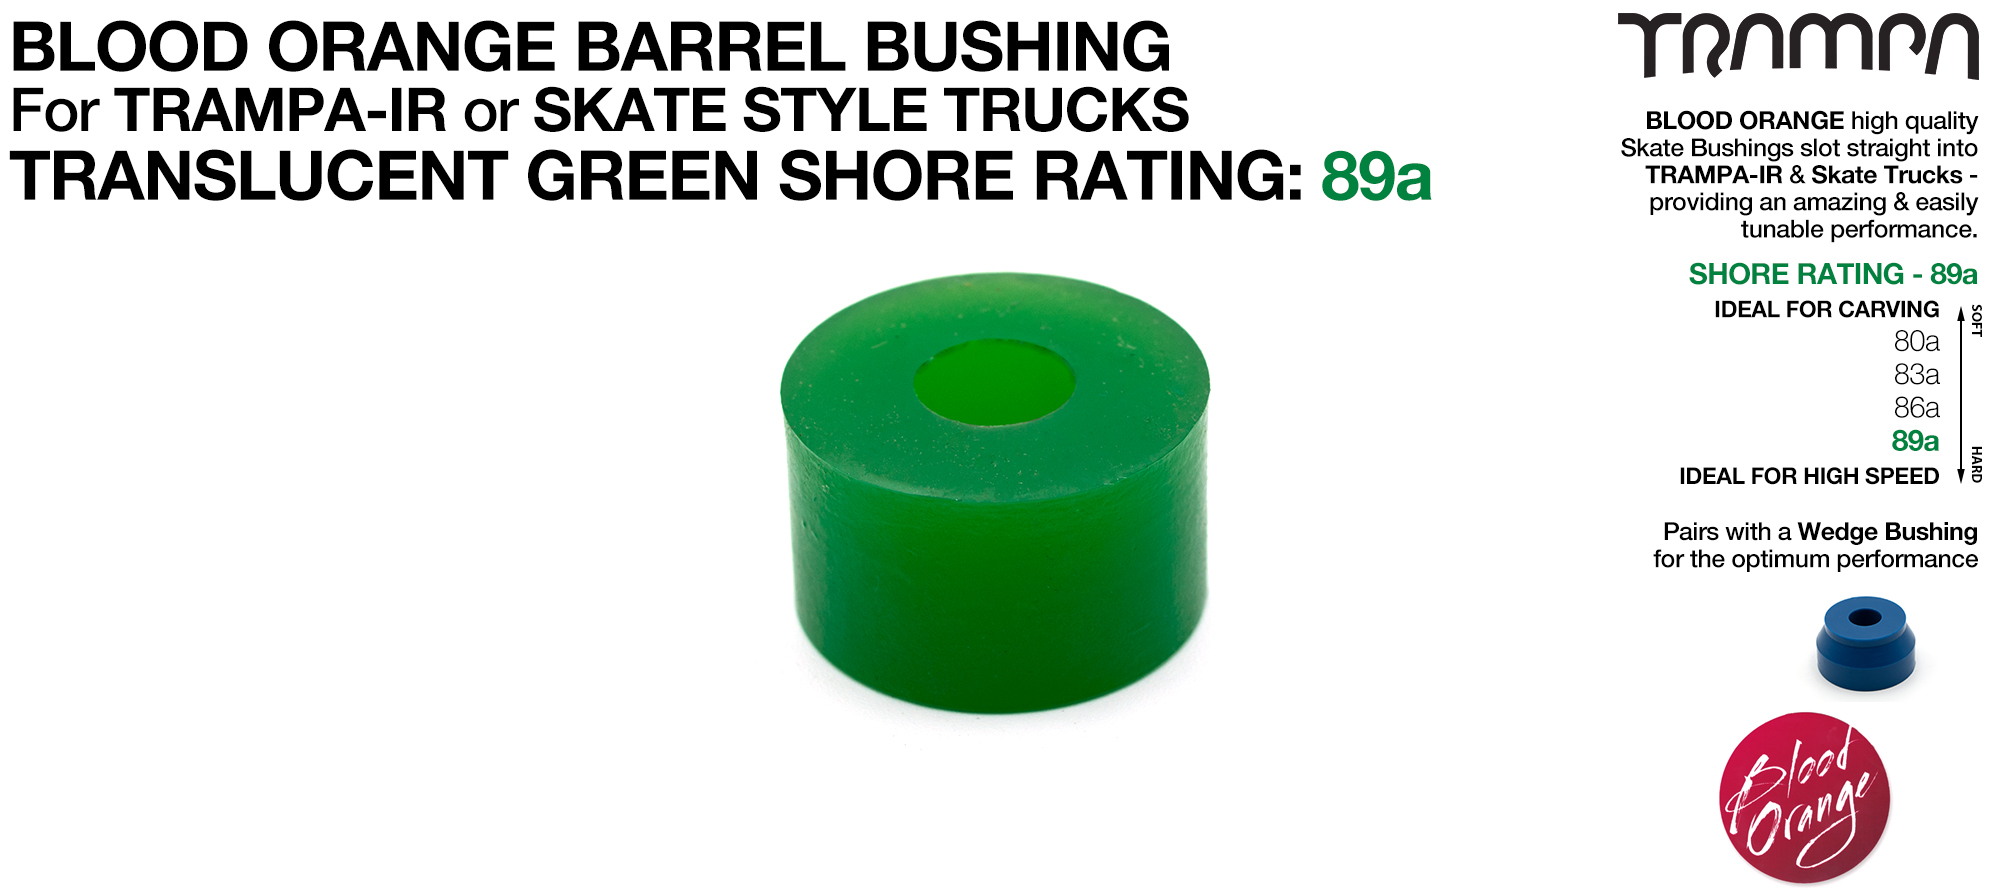 Blood Orange BARREL - Translucent GREEN 89a